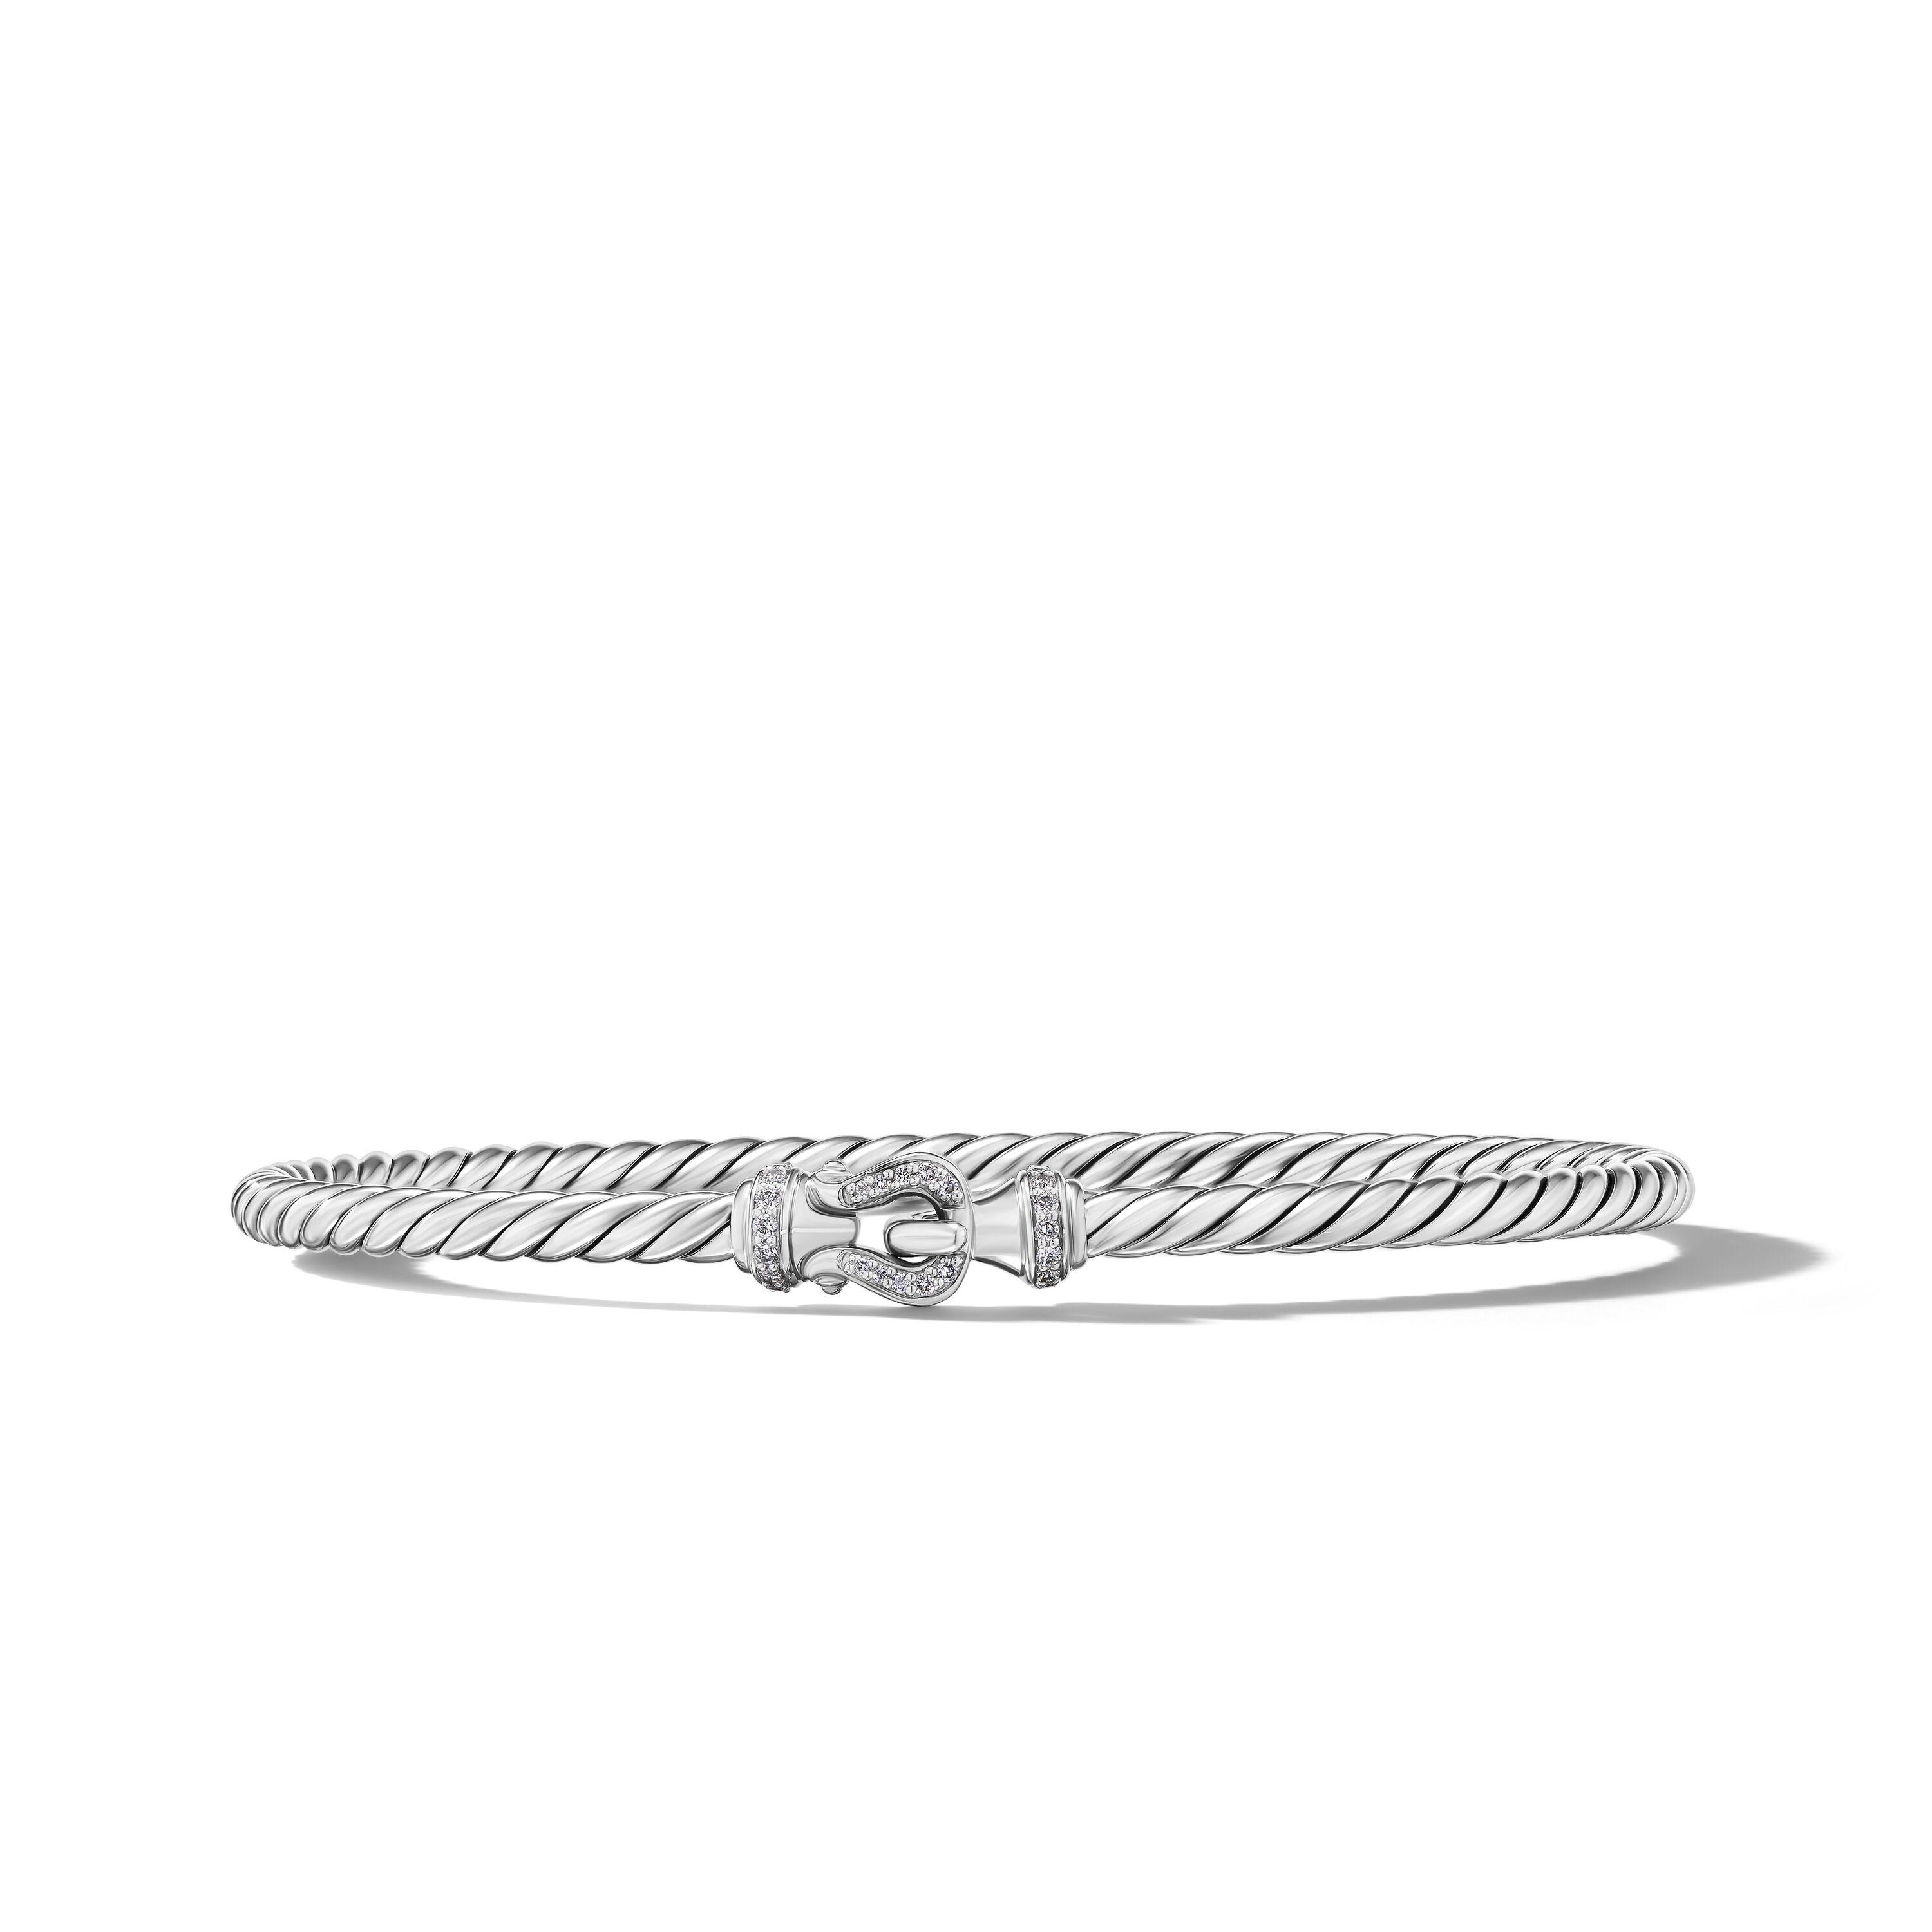 David Yurman 3mm Buckle Bracelet in Sterling Silver with Diamonds, Size Small 0